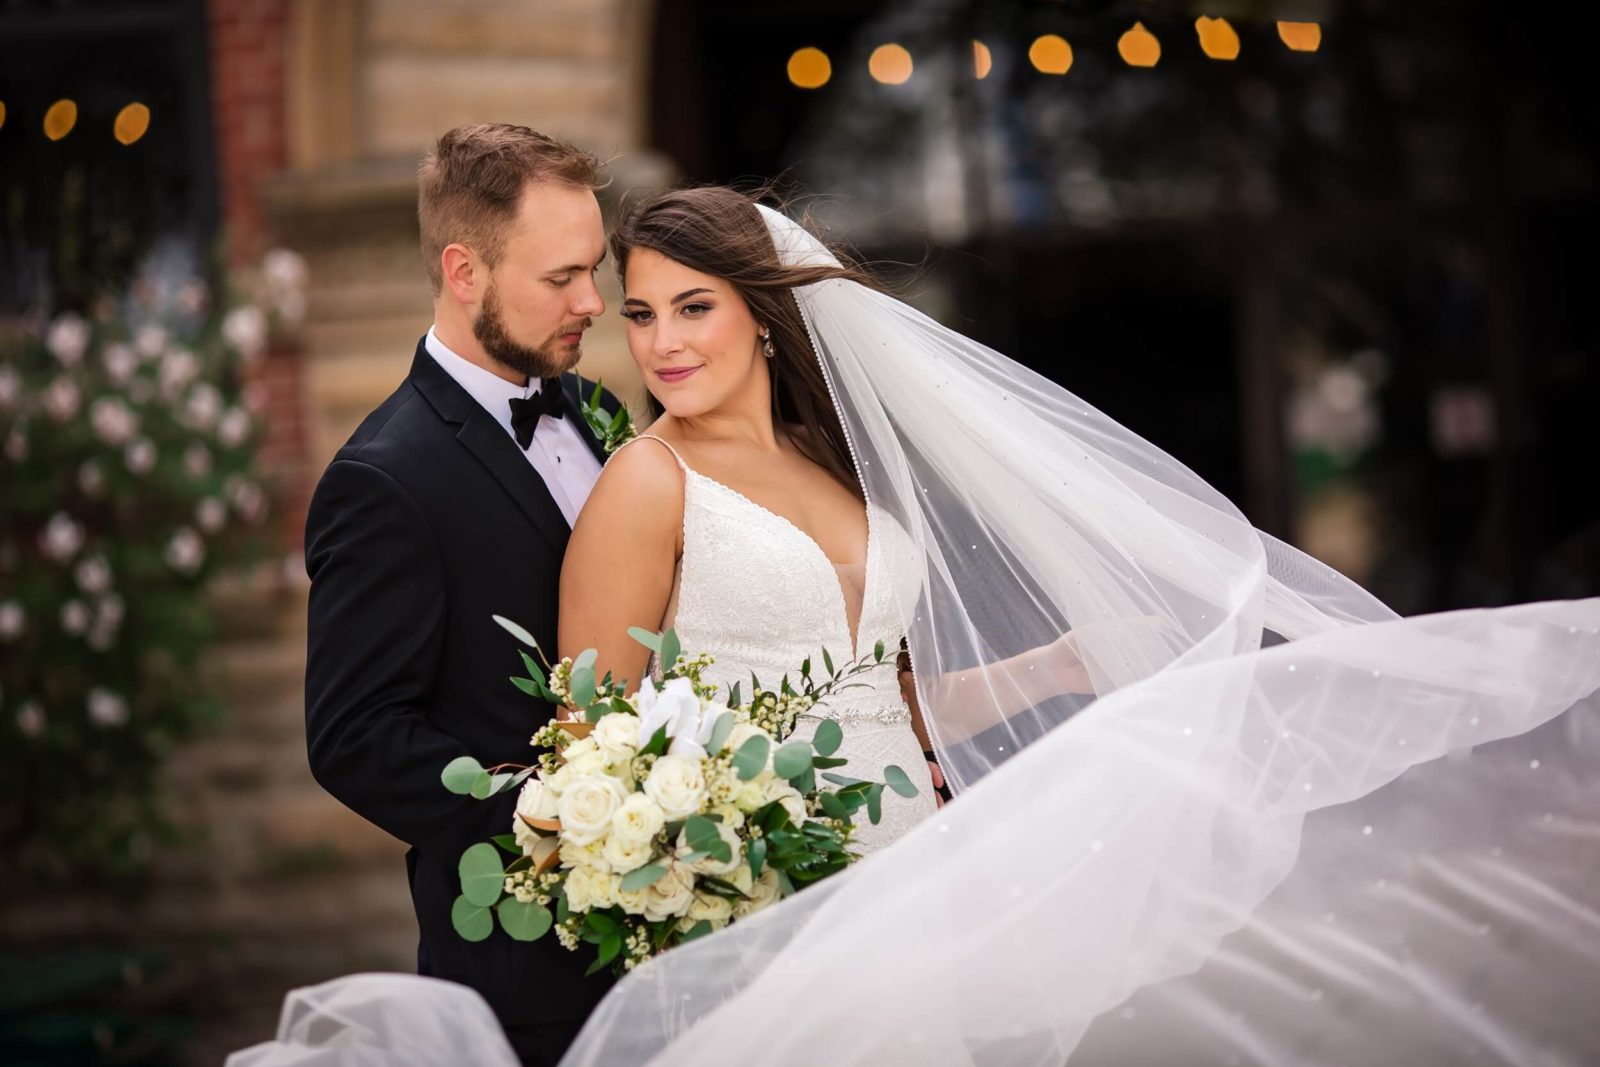 central illinois wedding & portrait photographer